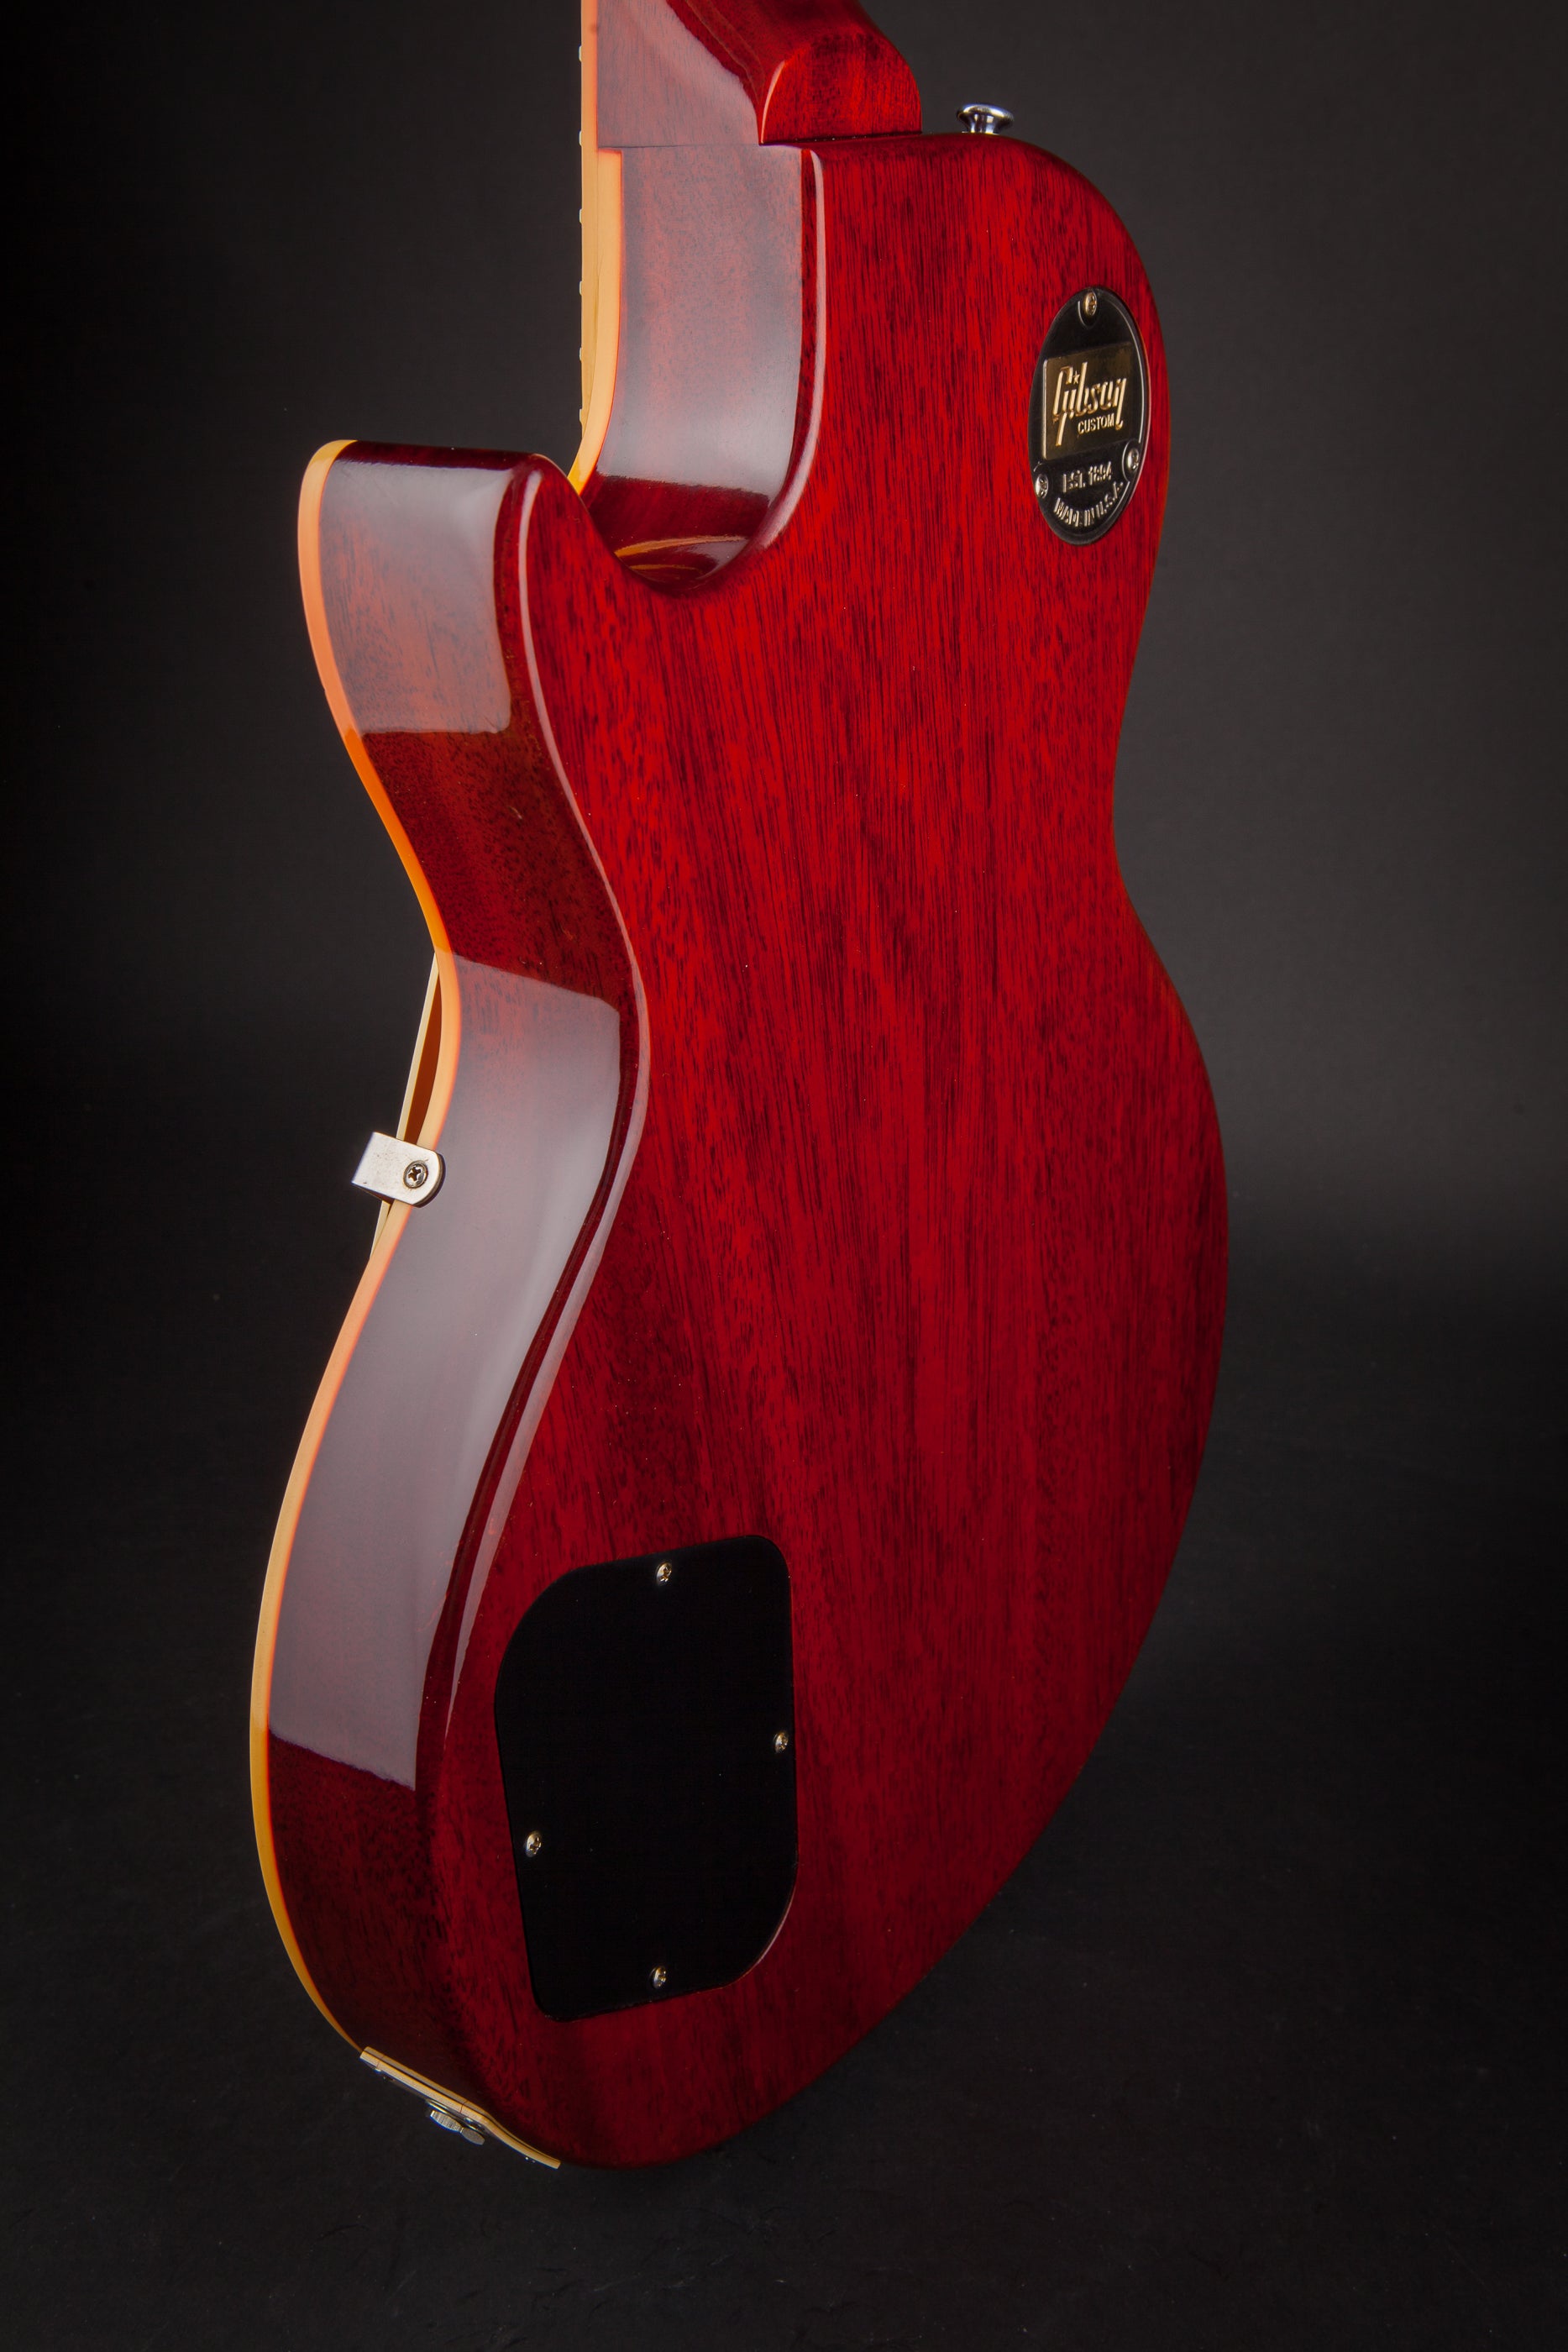 Gibson Custom Shop: Standard Historic VOS 59 Les Paul Washed Cherry Burst  #R97672